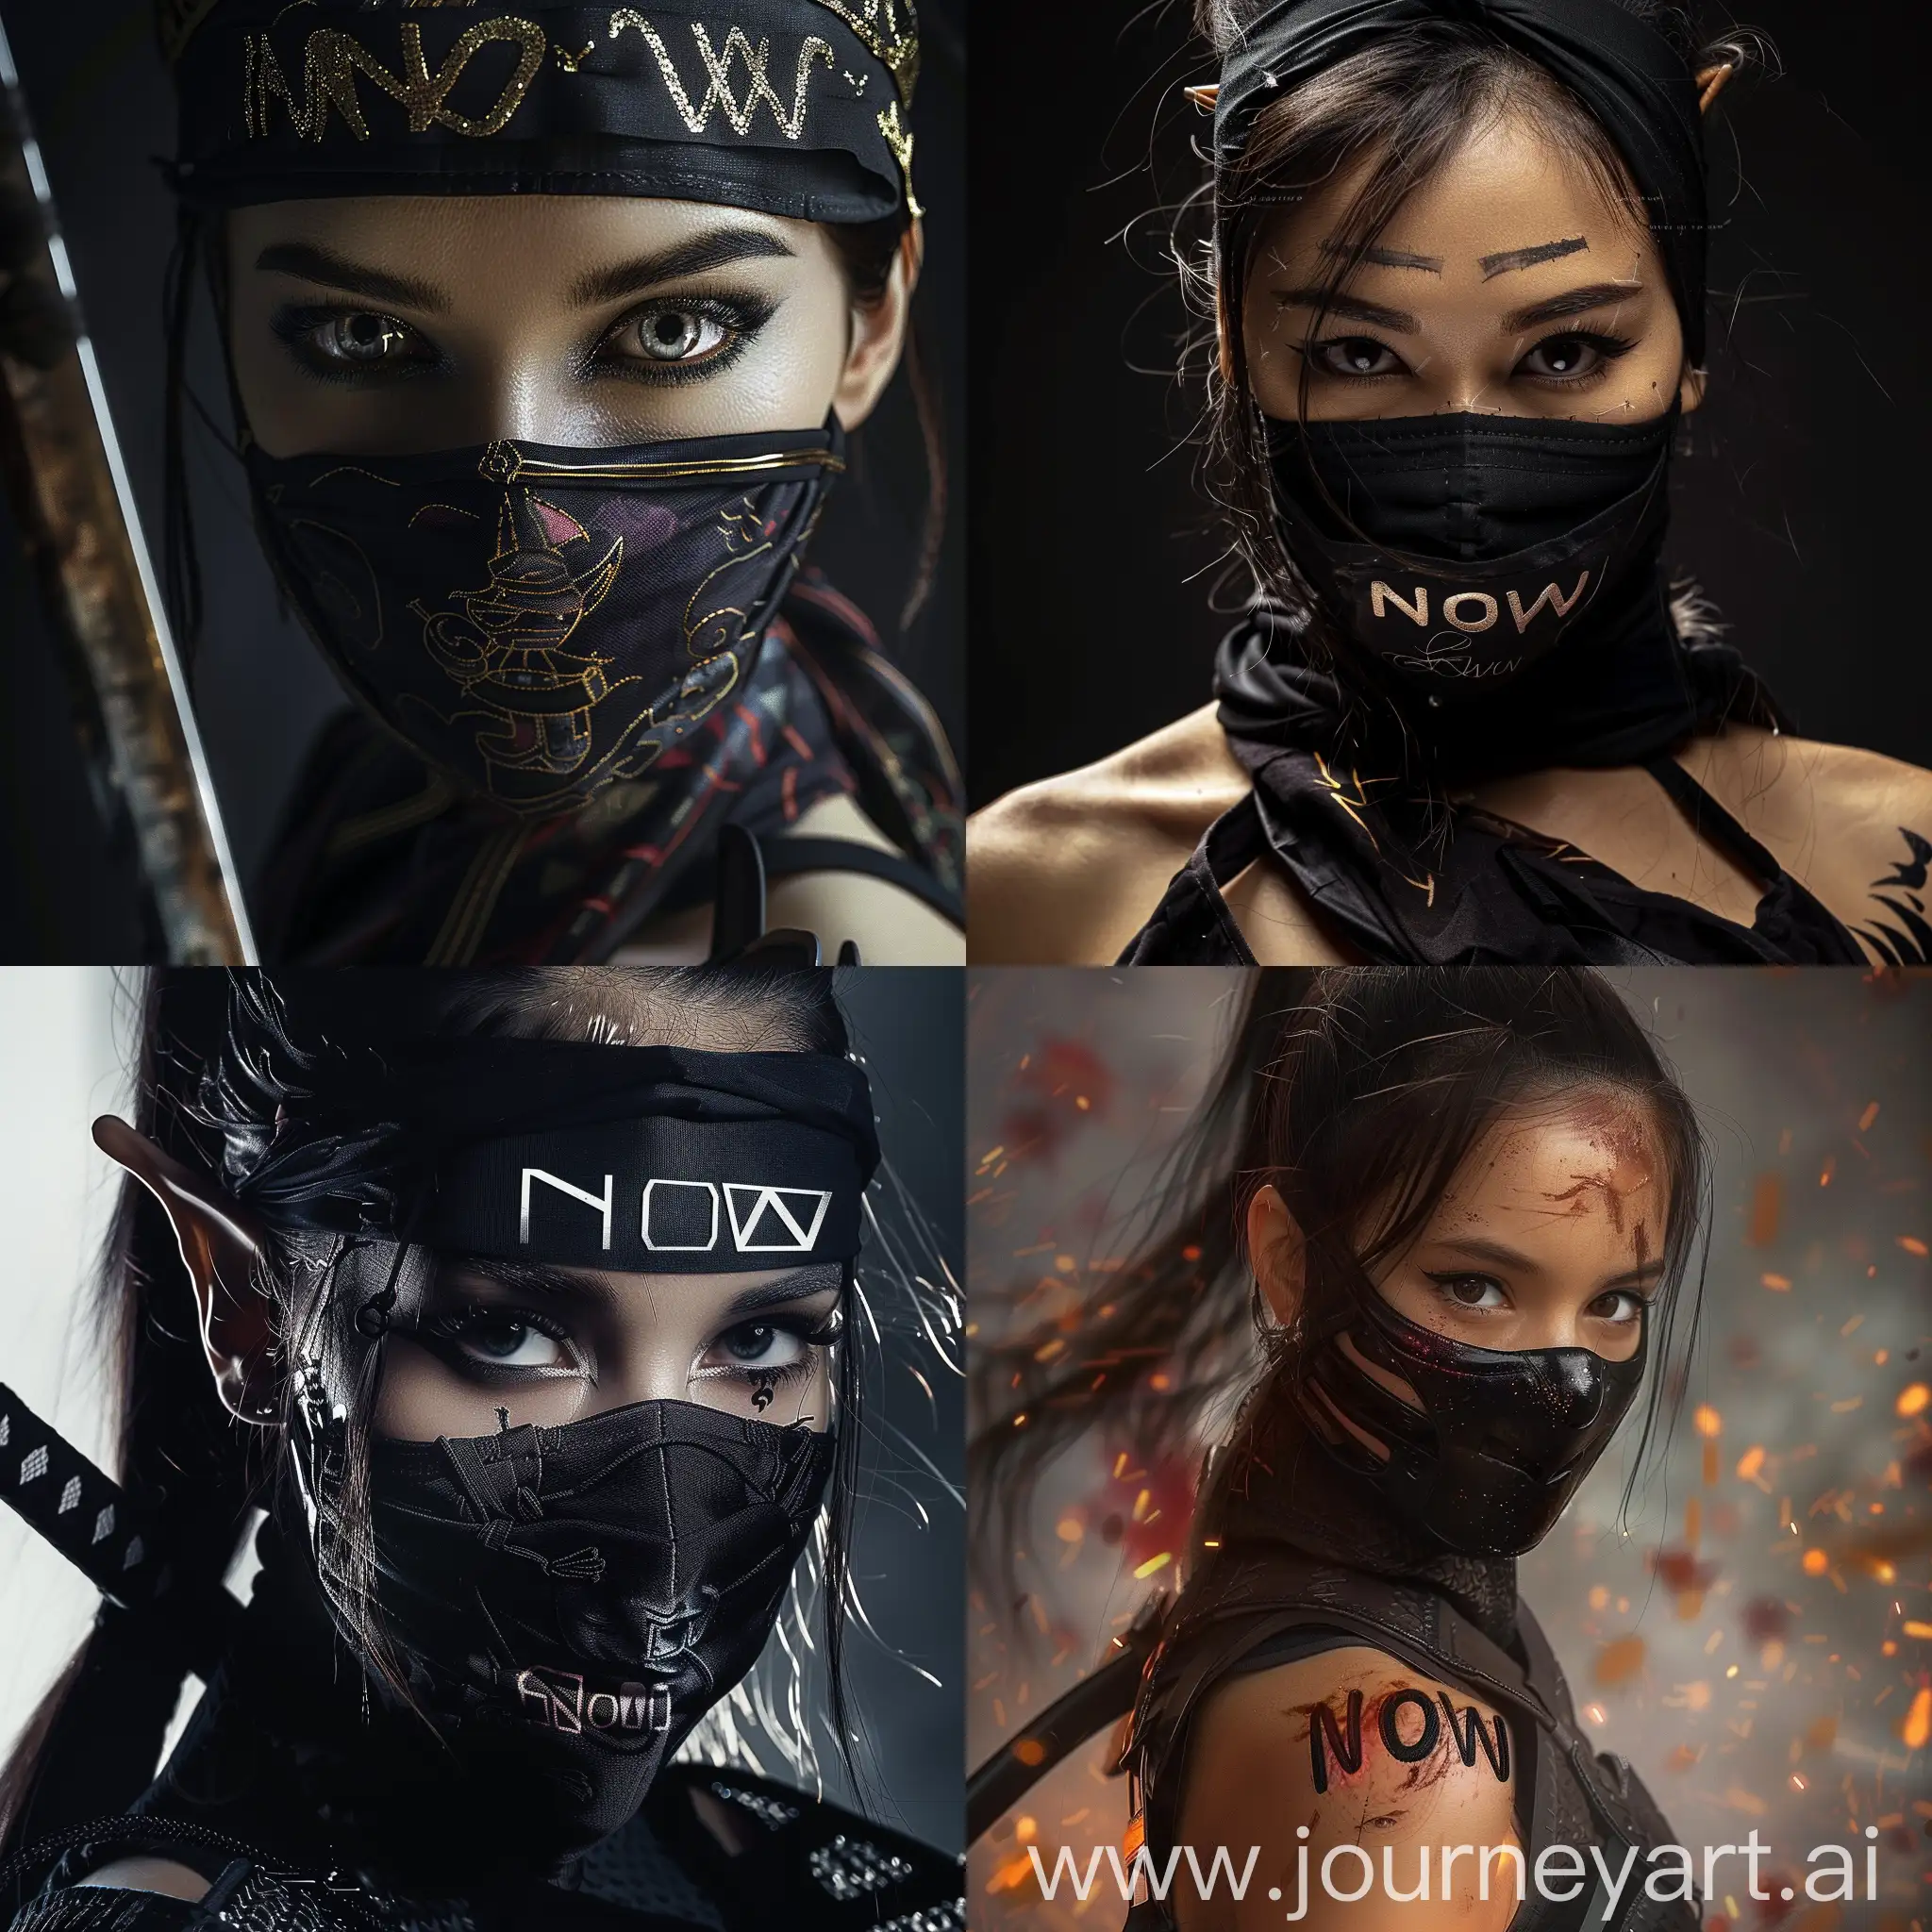 A beautiful ninja woman with the word "NOVA" written on her